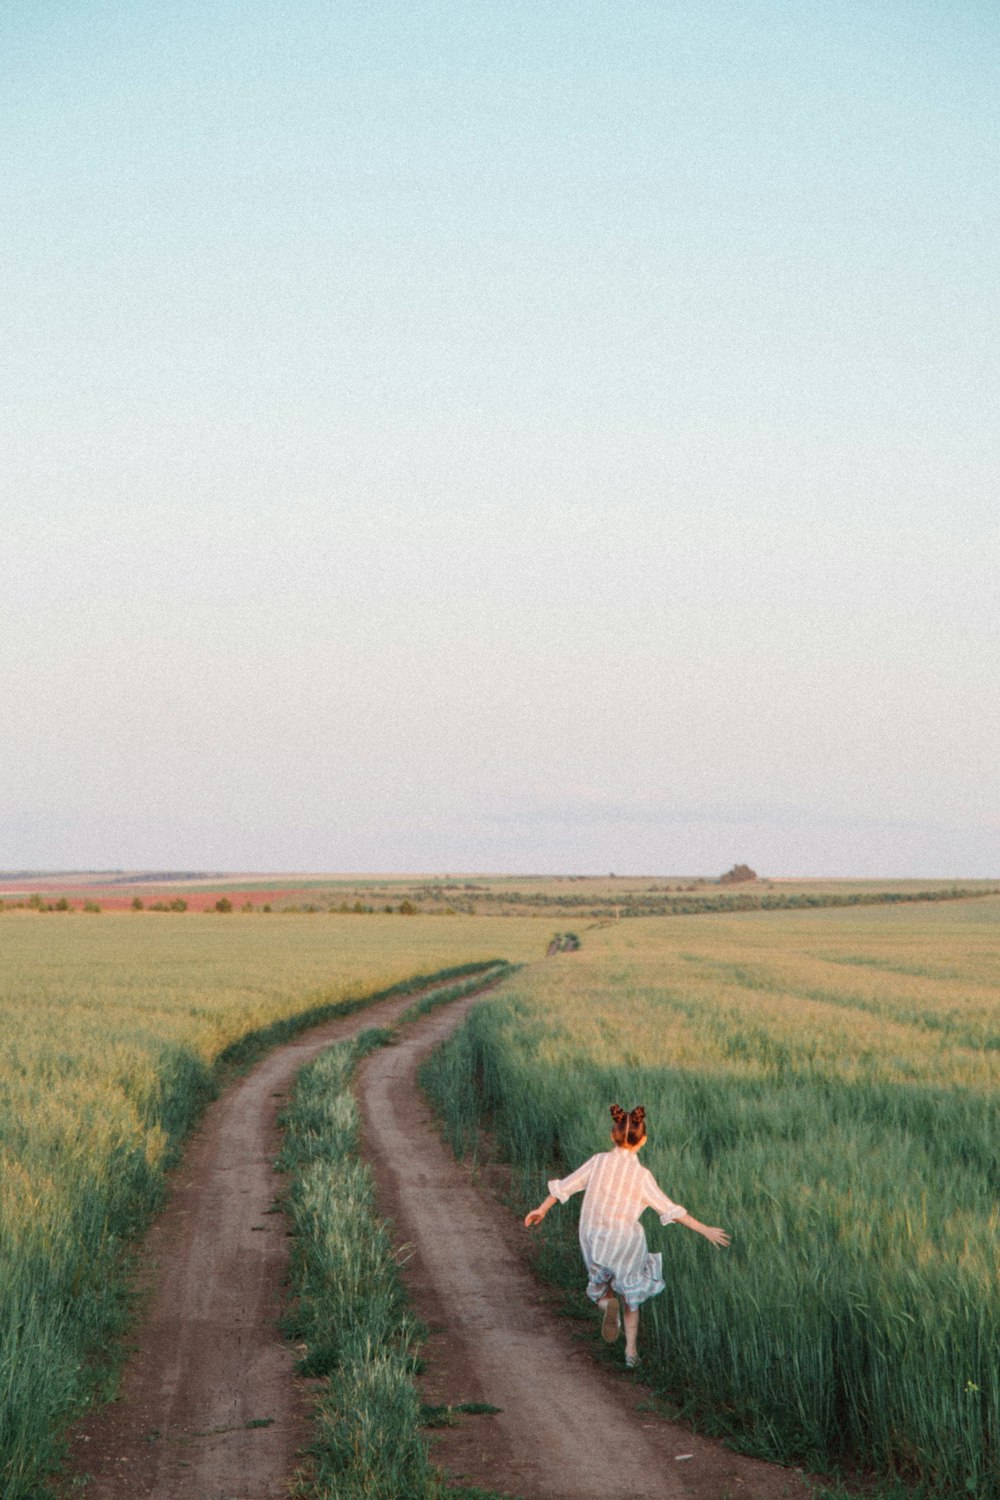 man in white dress shirt walking on brown dirt road between green grass field during daytime